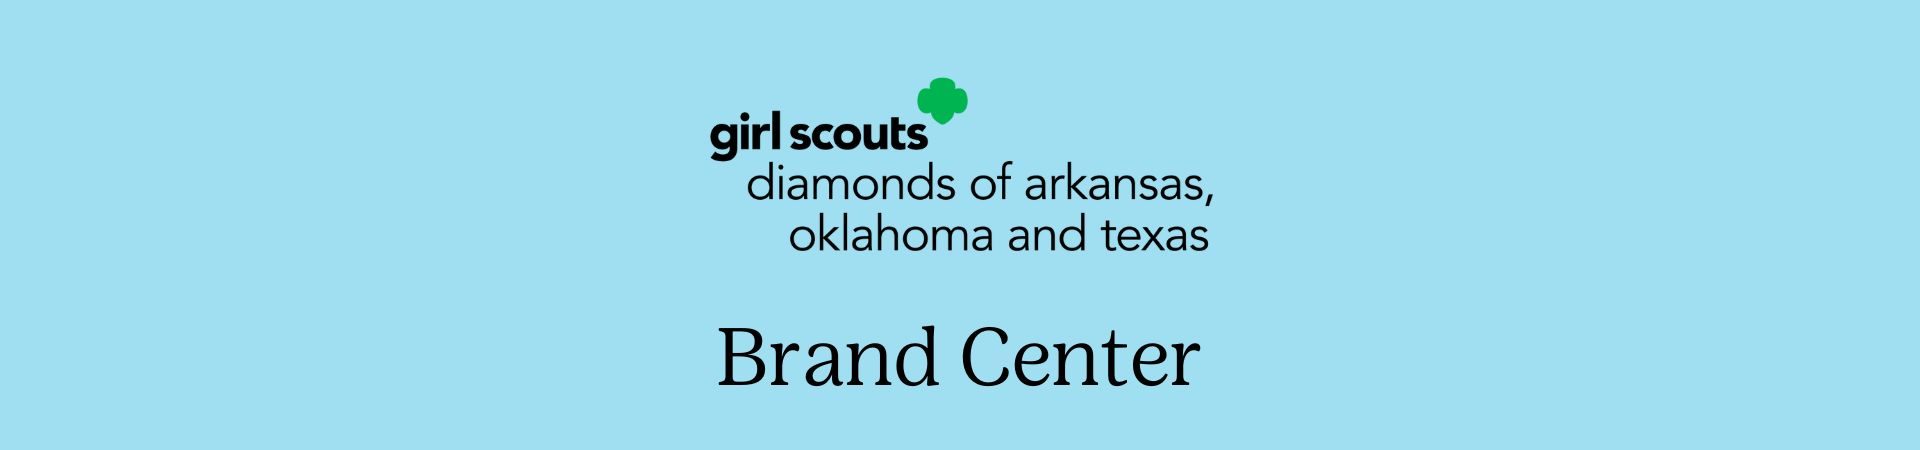  girl scouts diamonds logo 